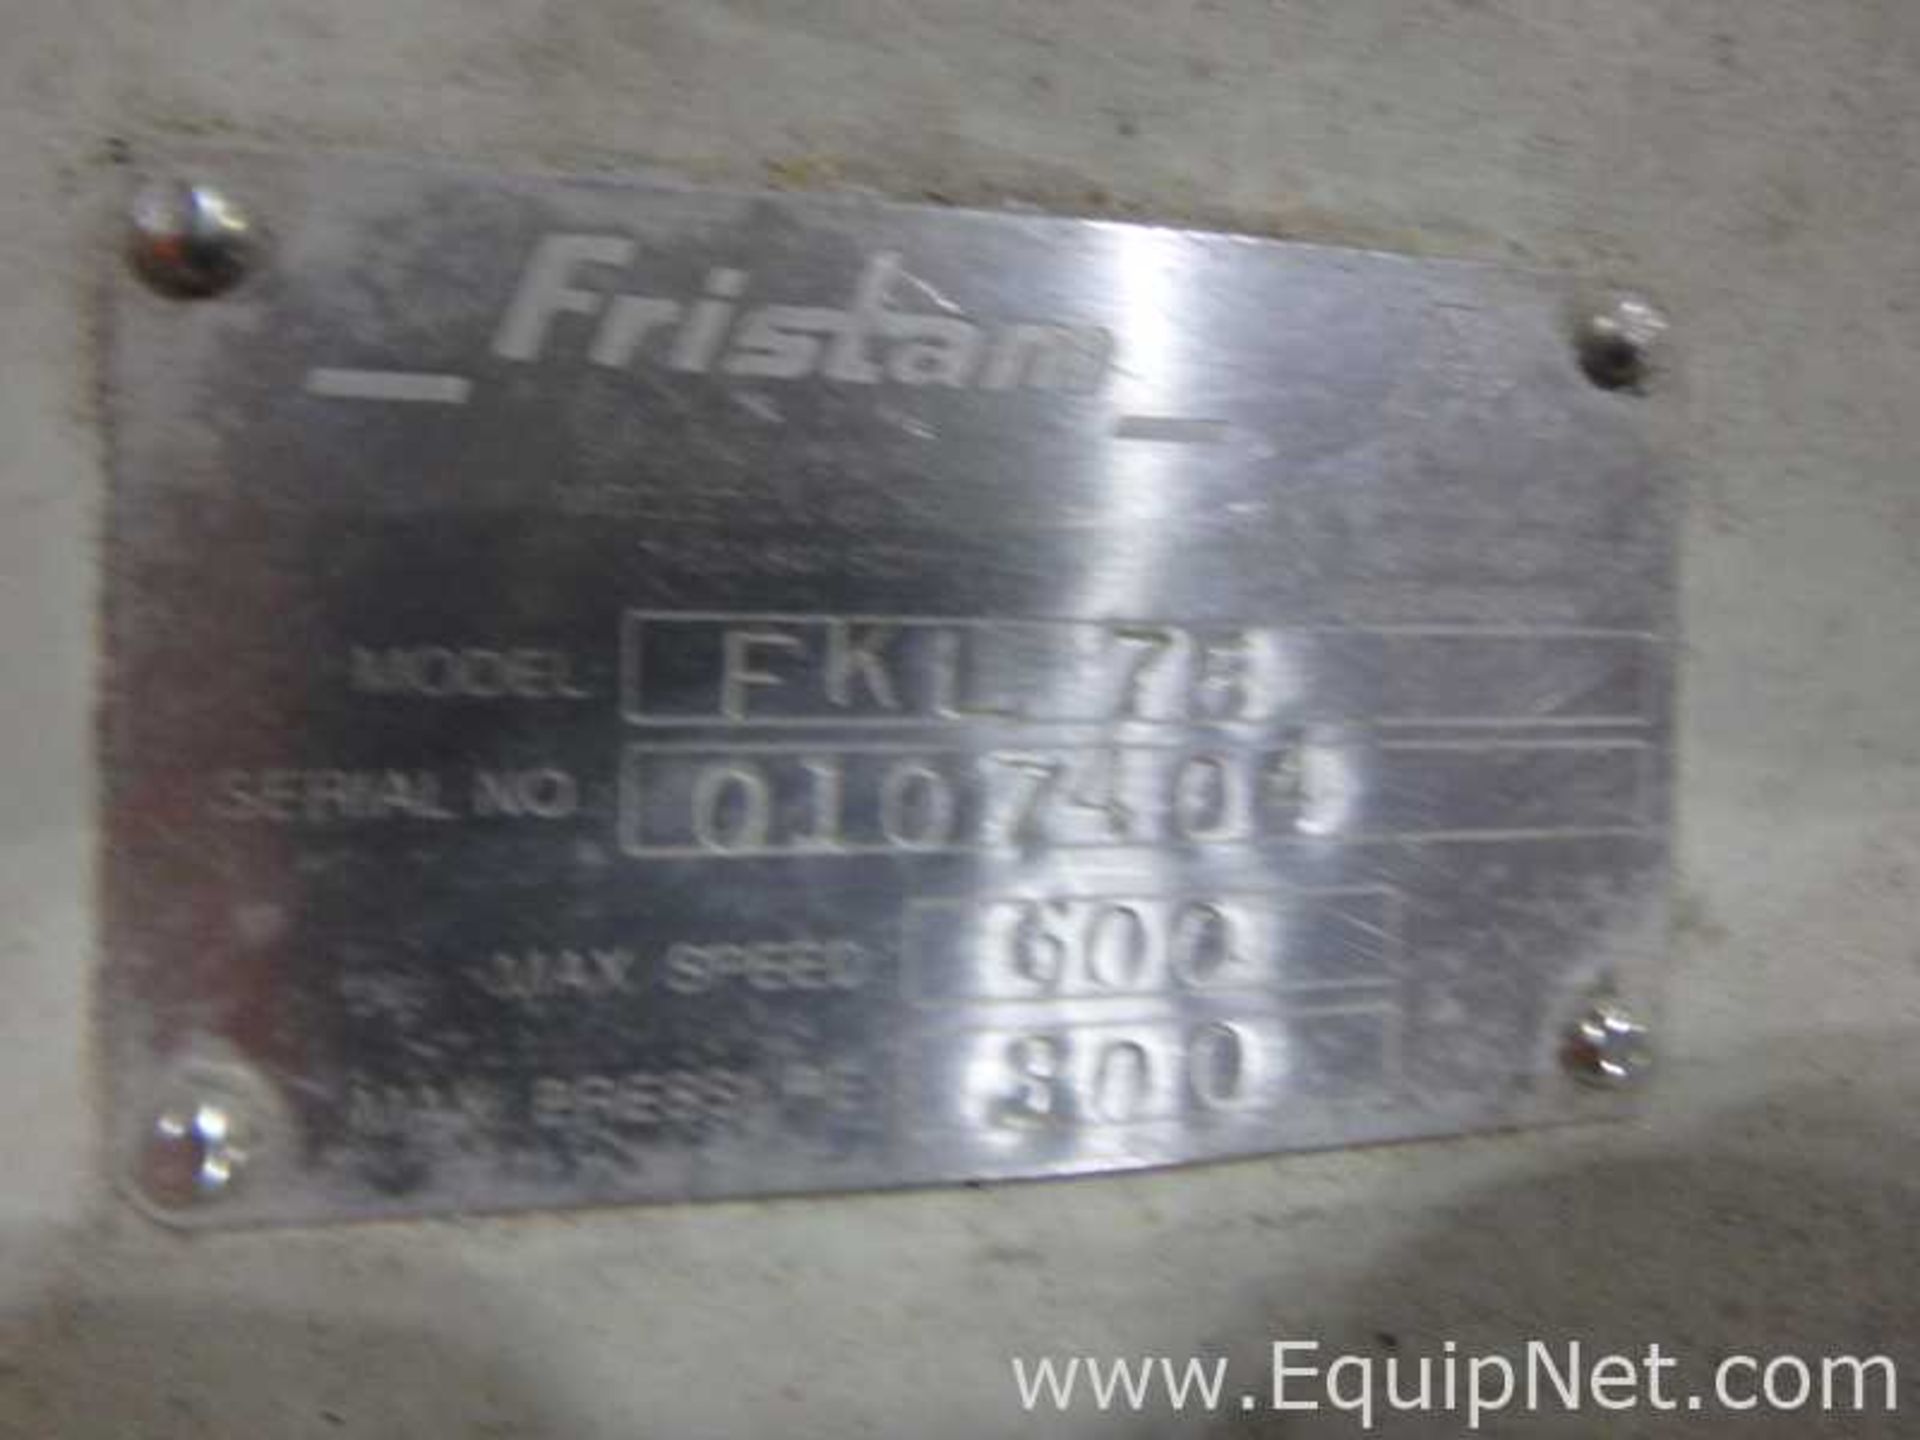 Fristam FKL 75 Lobe Pump - Image 10 of 11